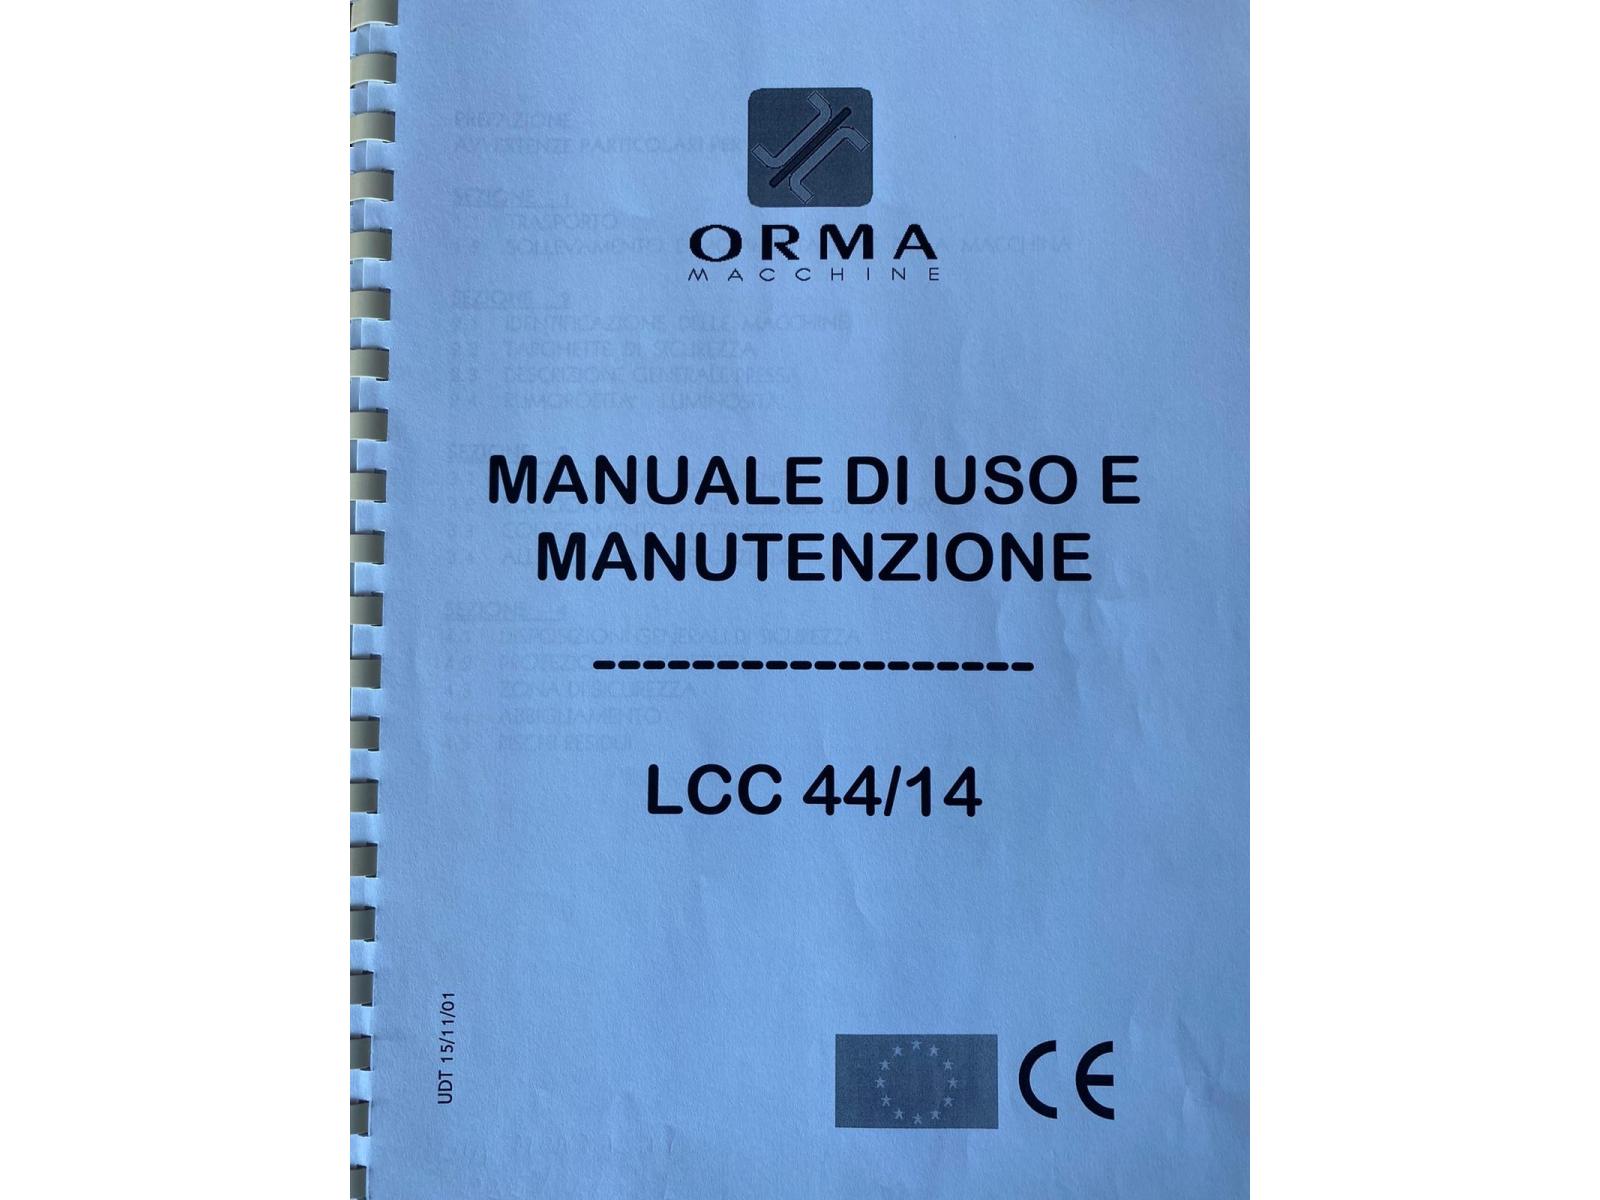 Linea di pressatura a caldo ORMA MACCHINE LCC 44/14